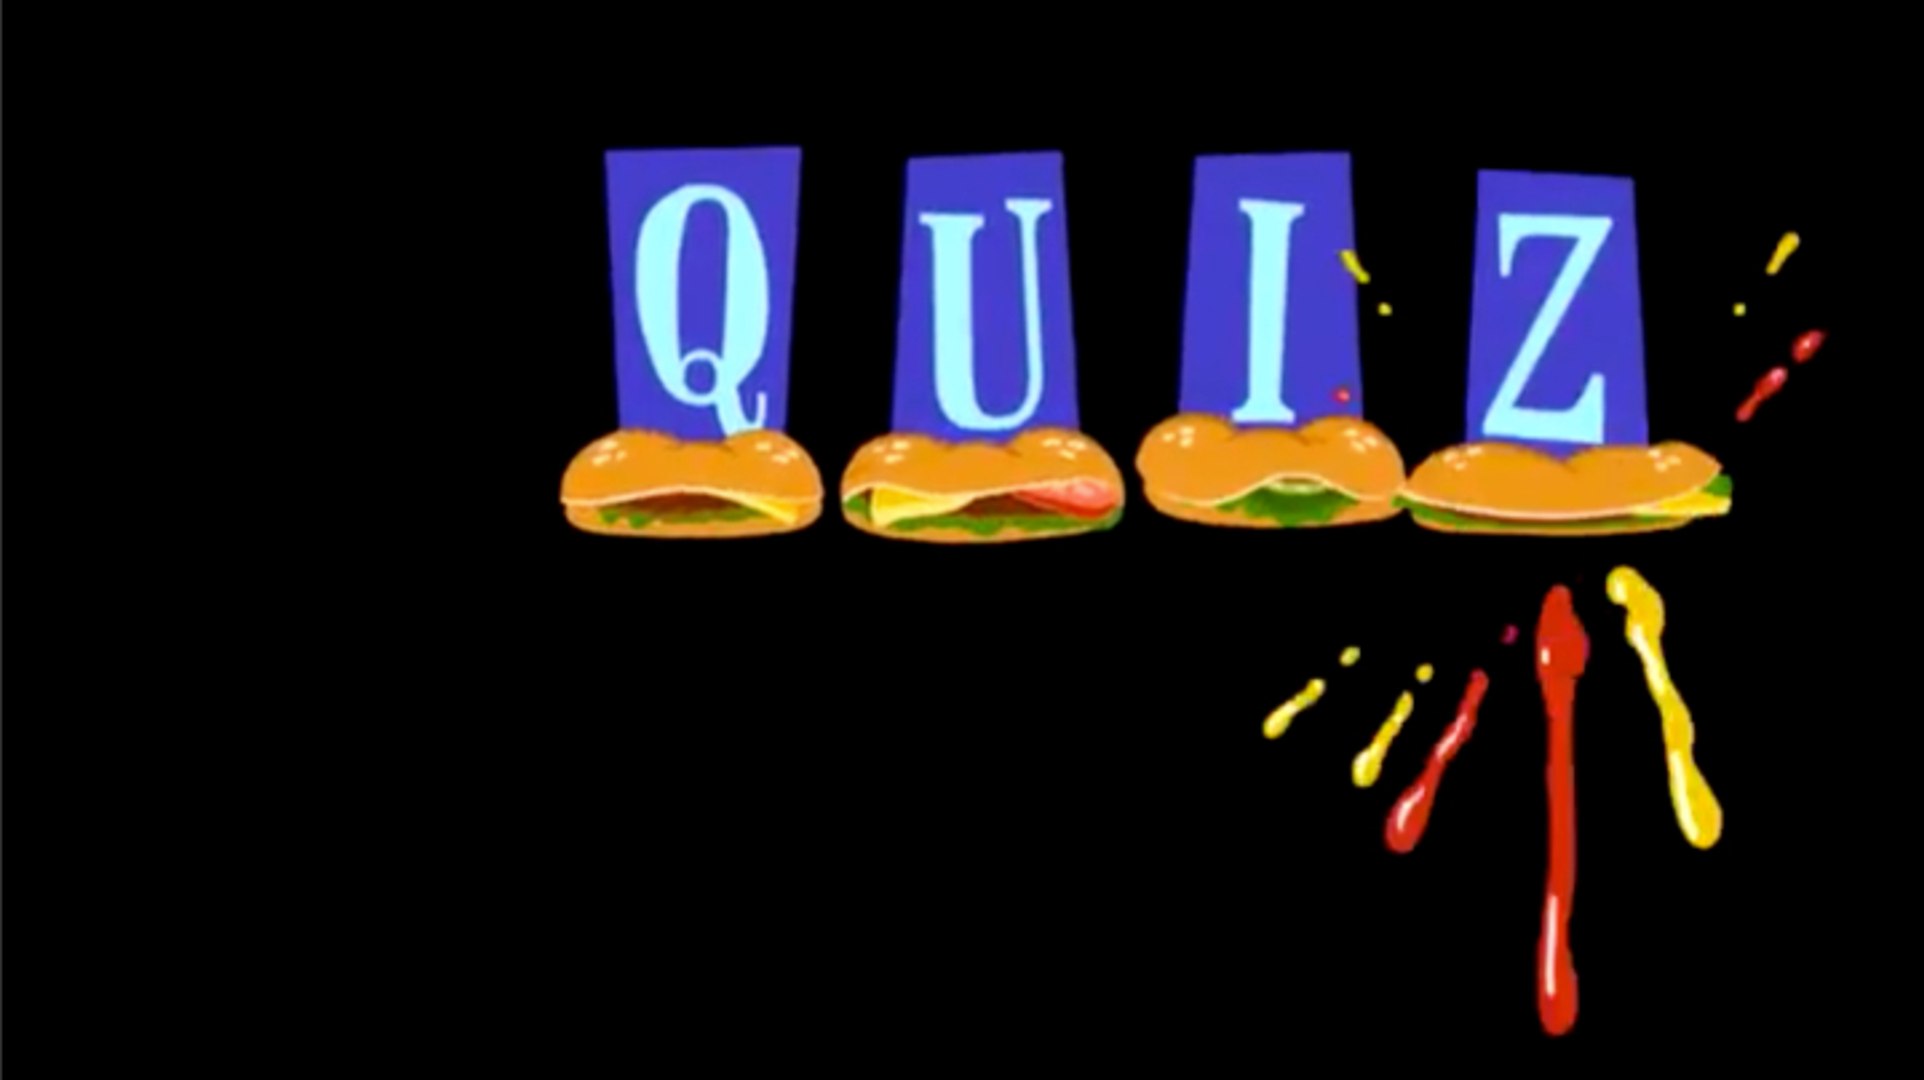 Burger Quiz (TMC) tease sa saison 4 ! - Vidéo Dailymotion